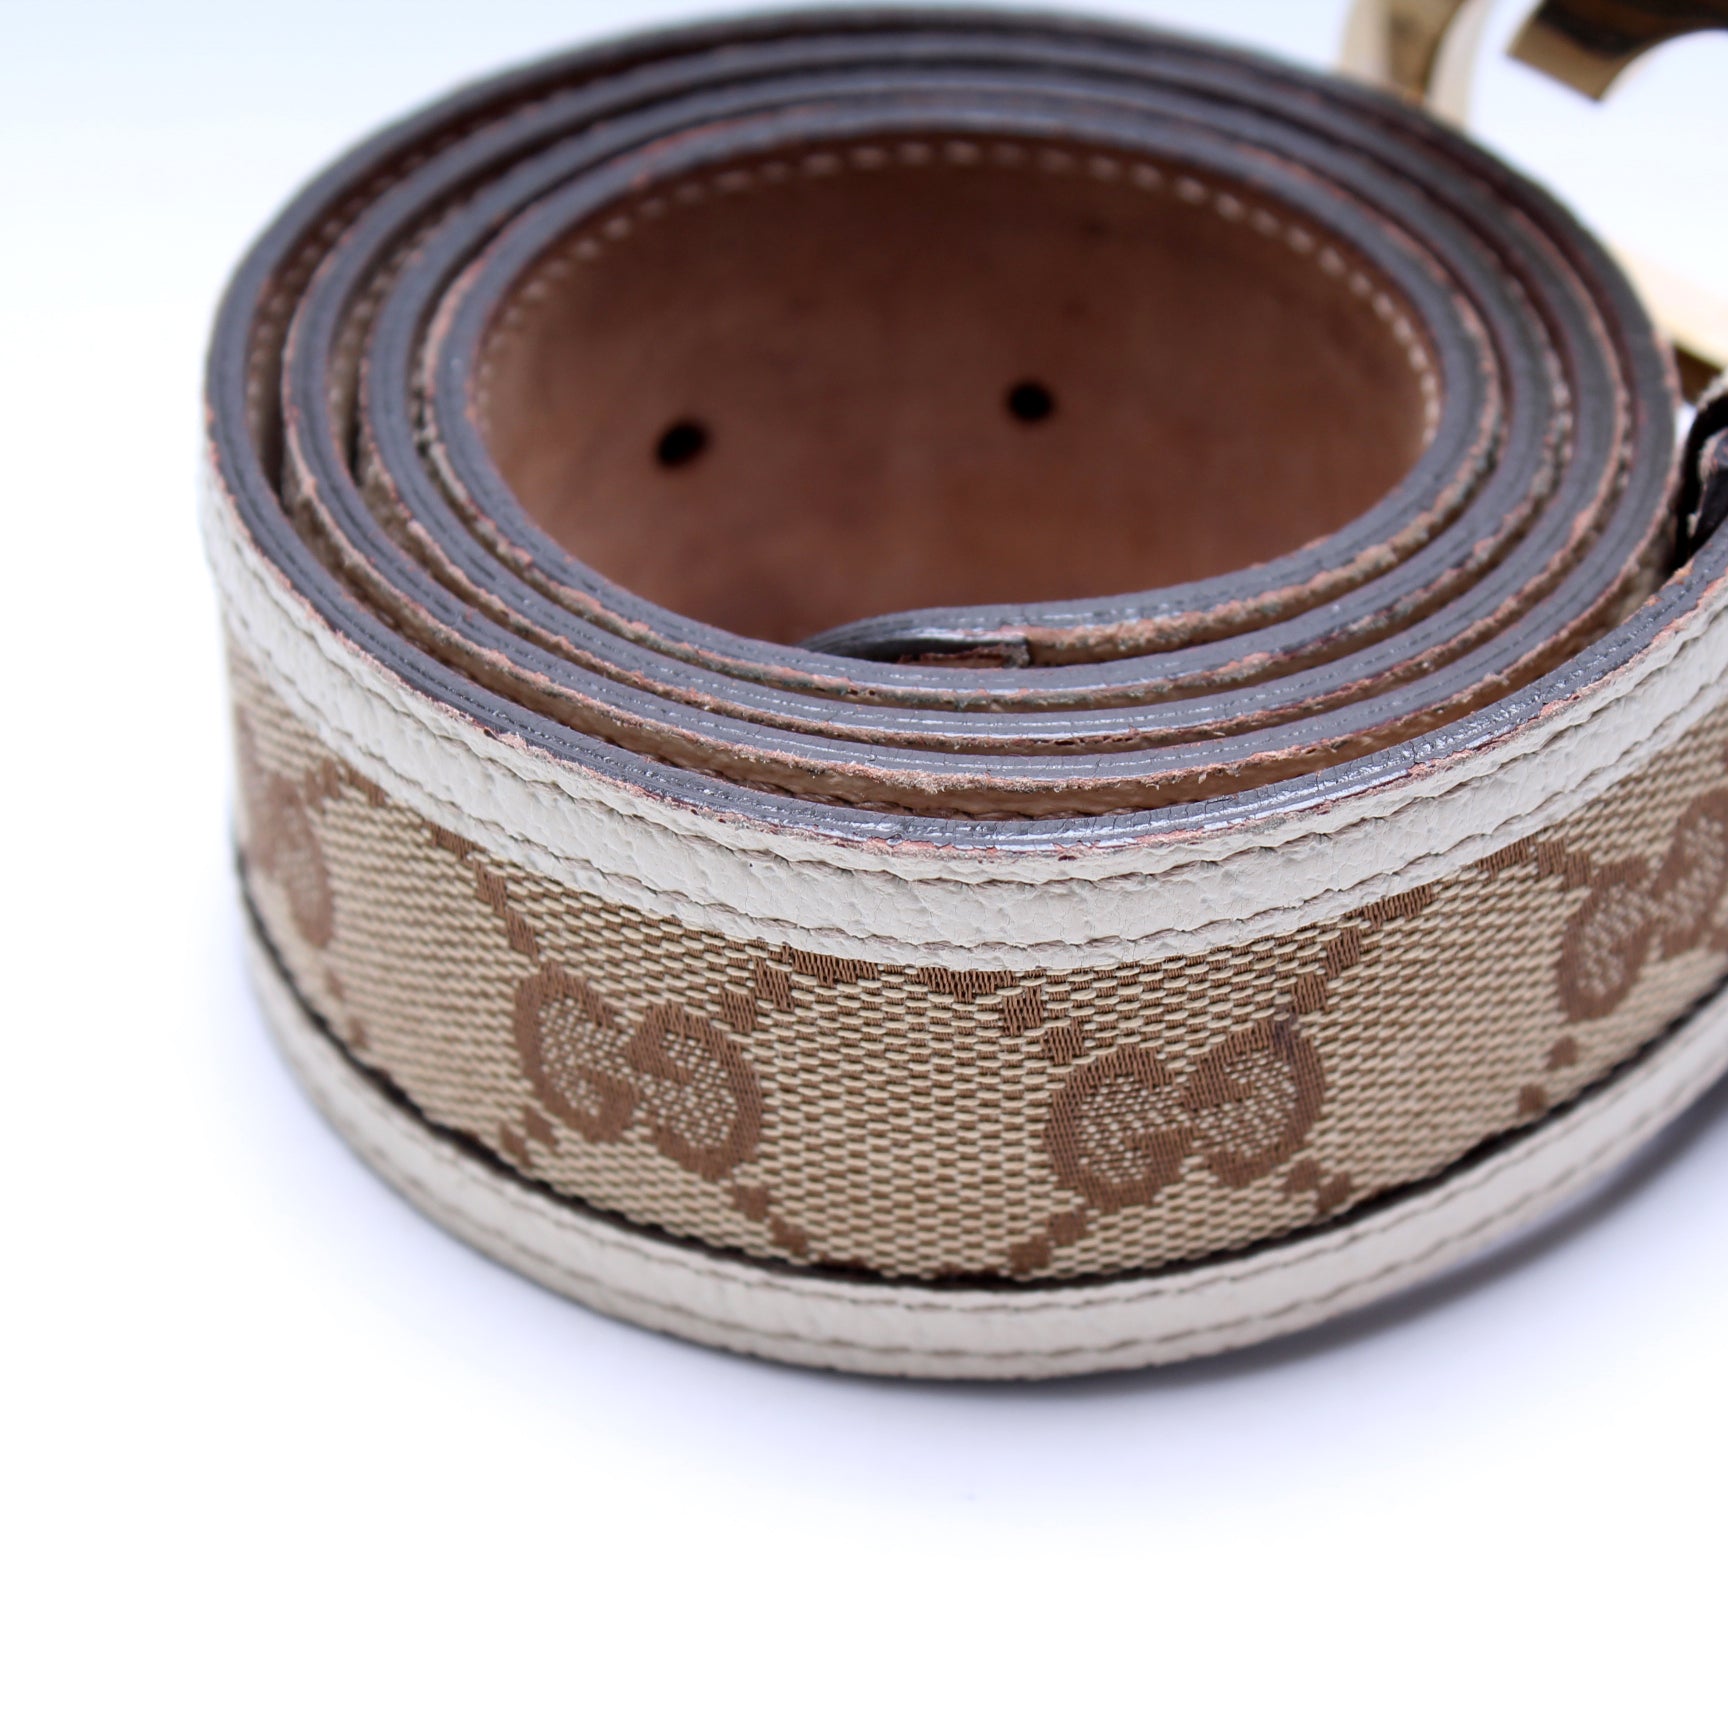 Designer Size 85/34 GG – 114876 Canvas Interlocking Keeks Handbags Belt